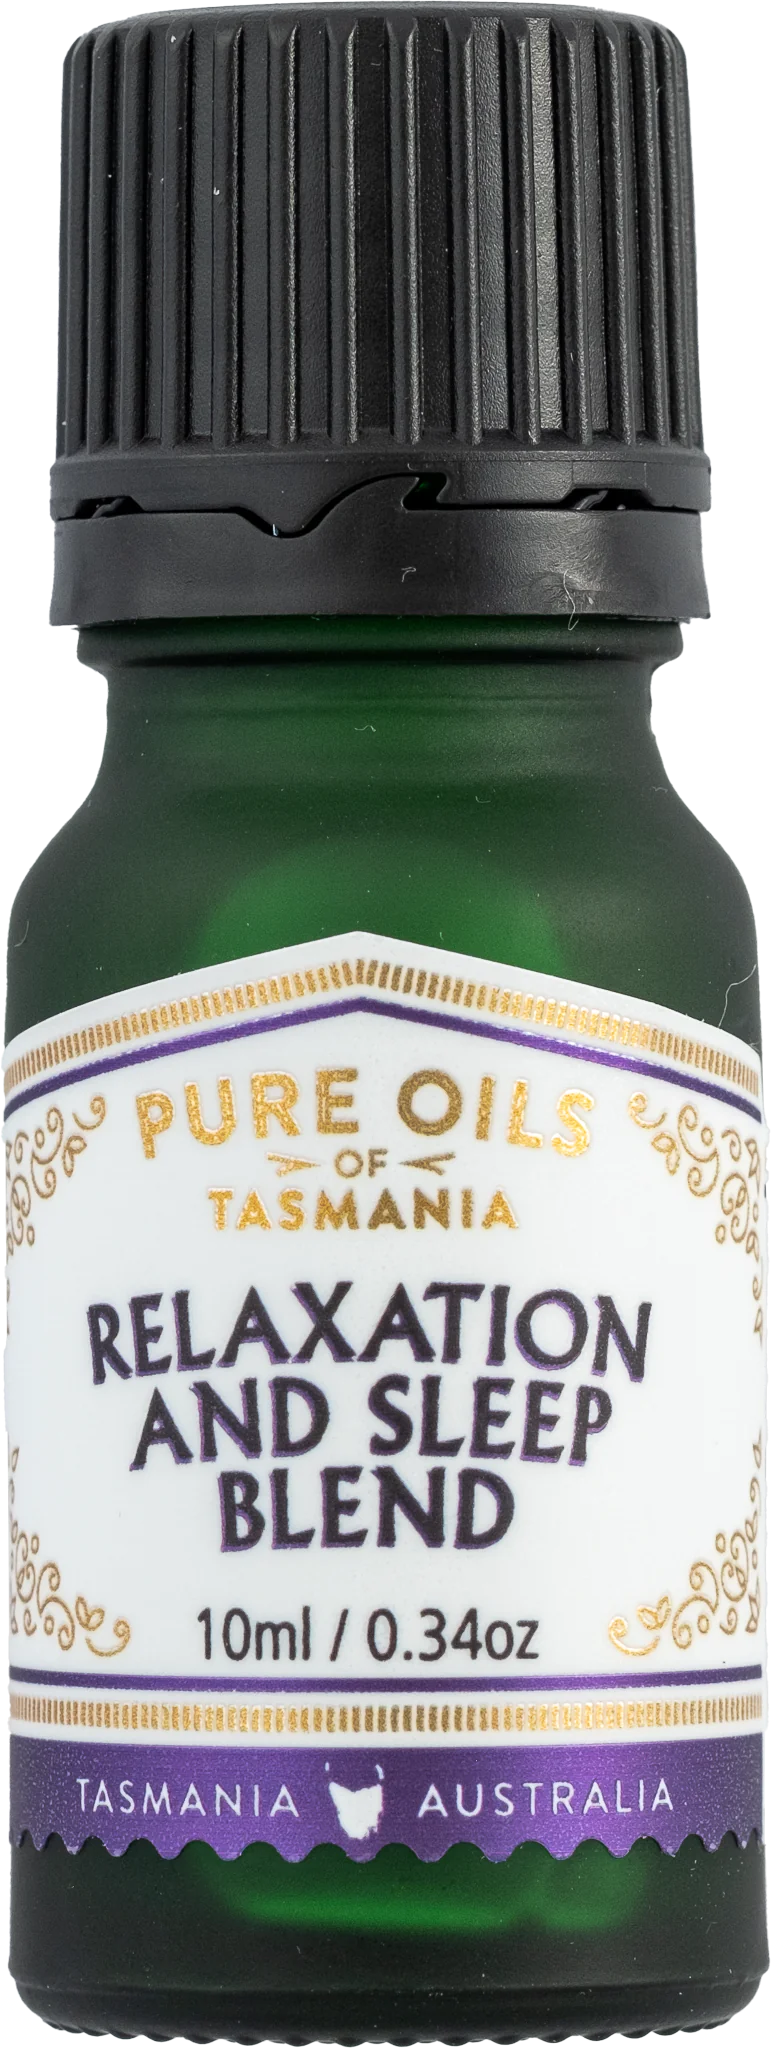 Pure Oil Blends - Pure Oils of Tasmania Body pure oils tasmania Relaxation & Sleep Blend 